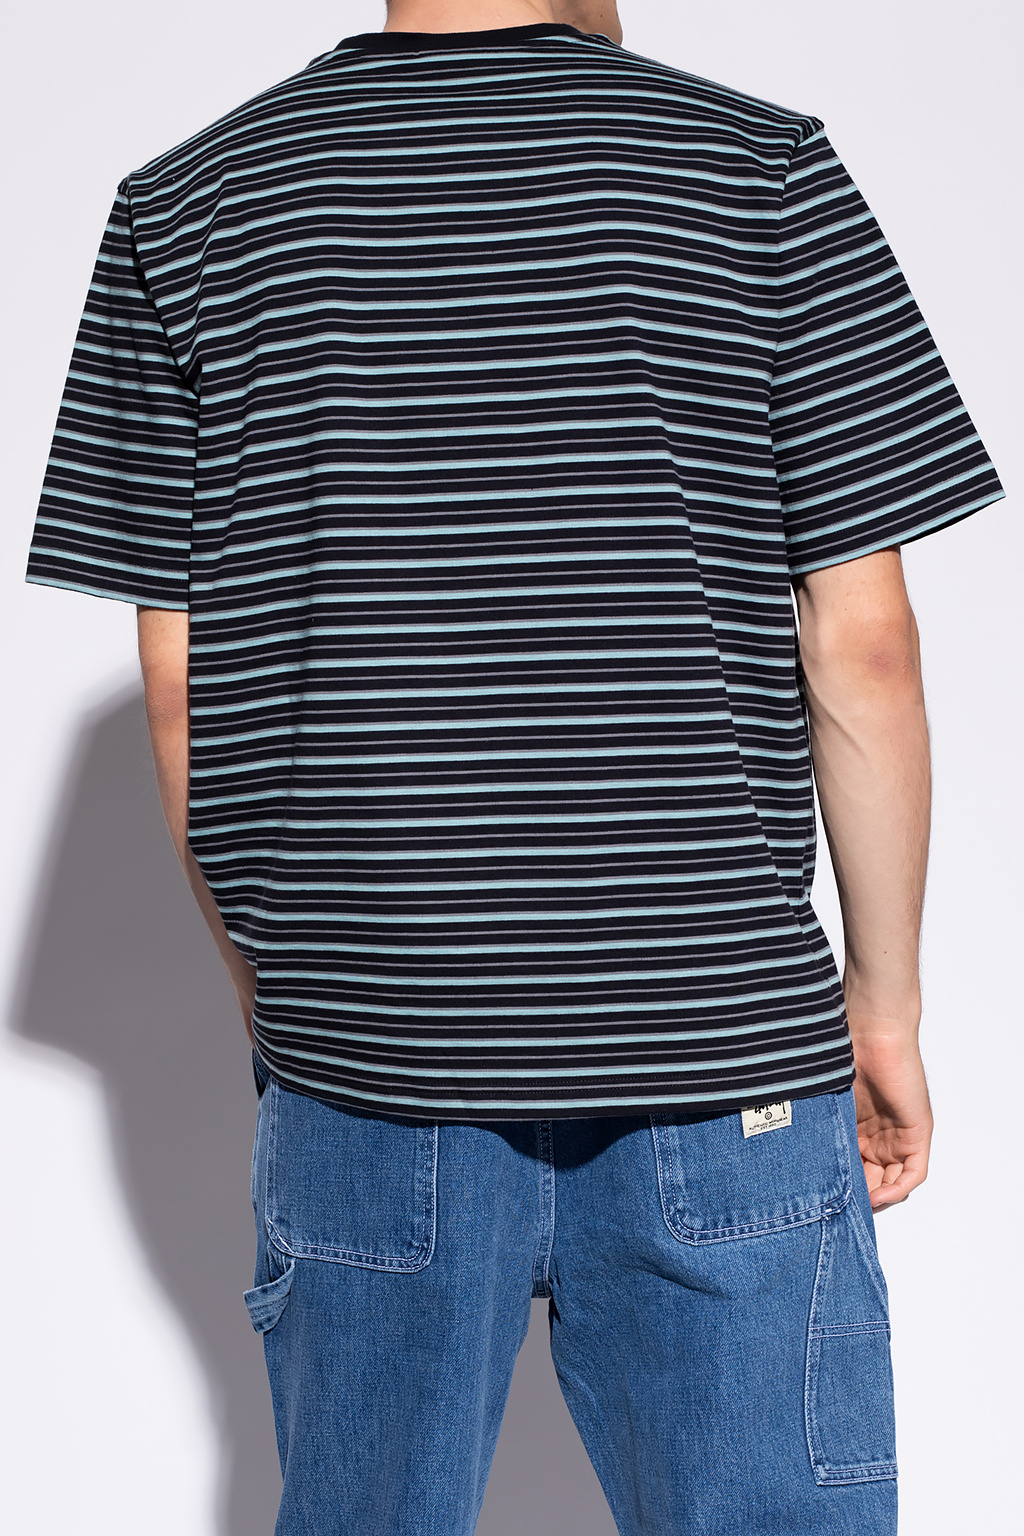 Stussy Striped T-shirt